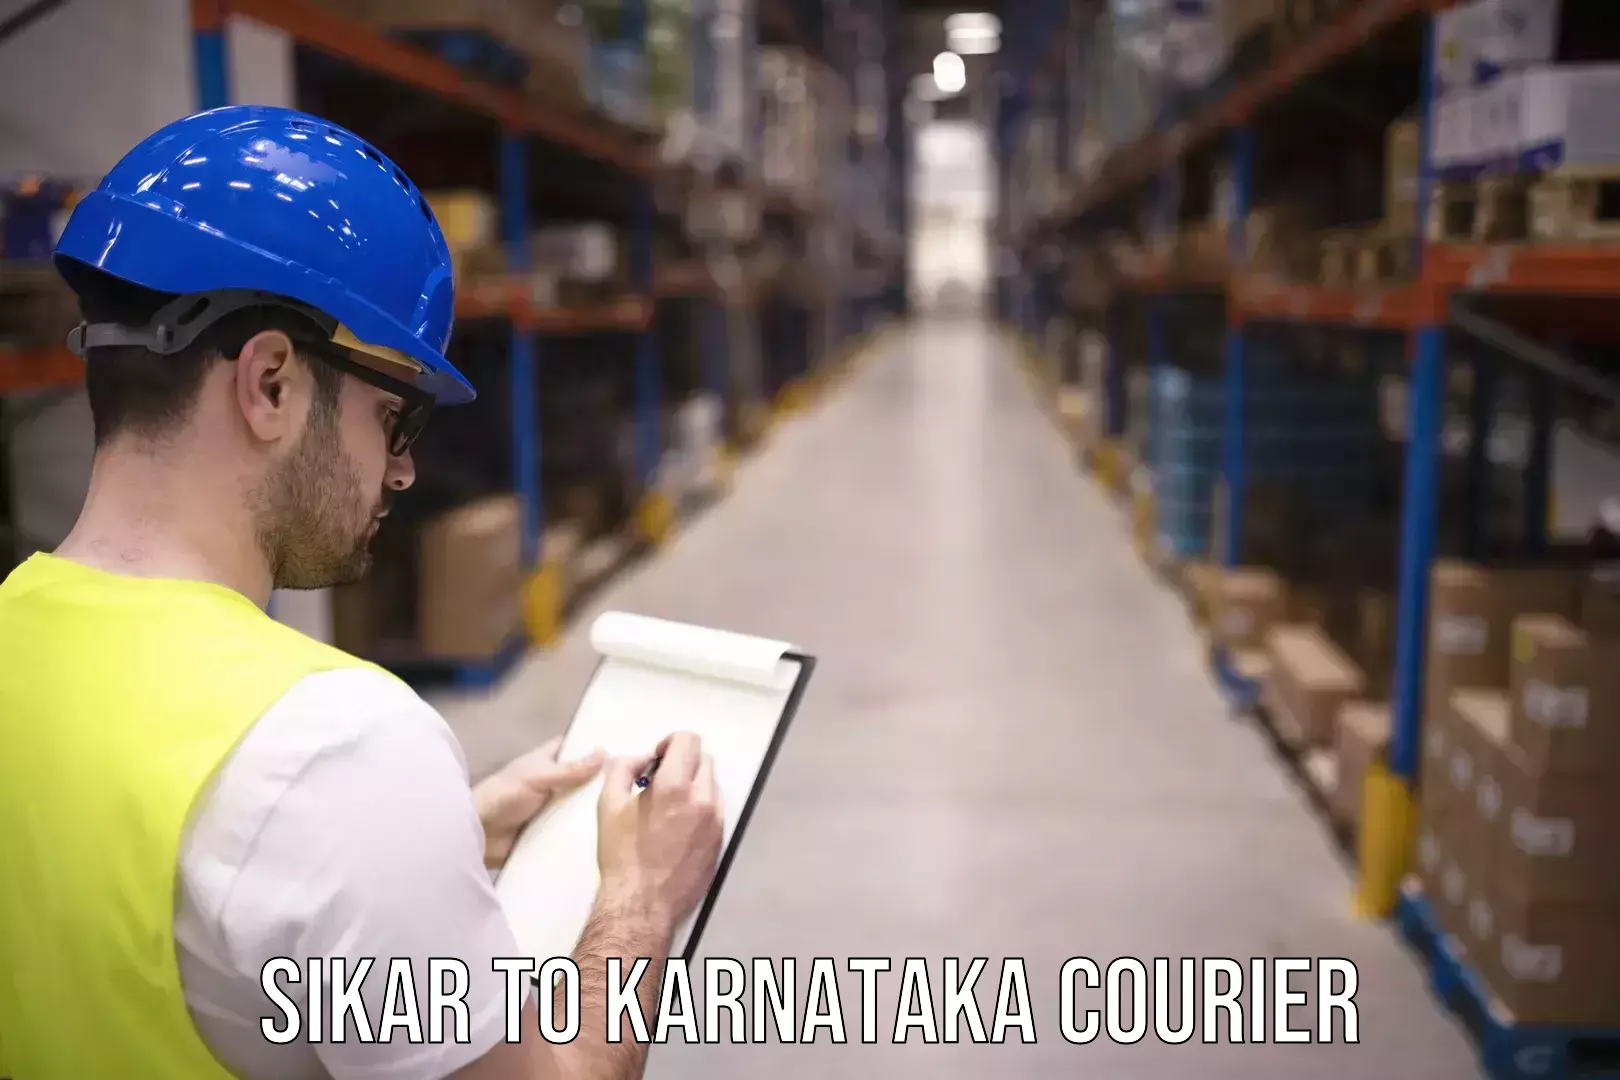 Courier service efficiency Sikar to Honnavar